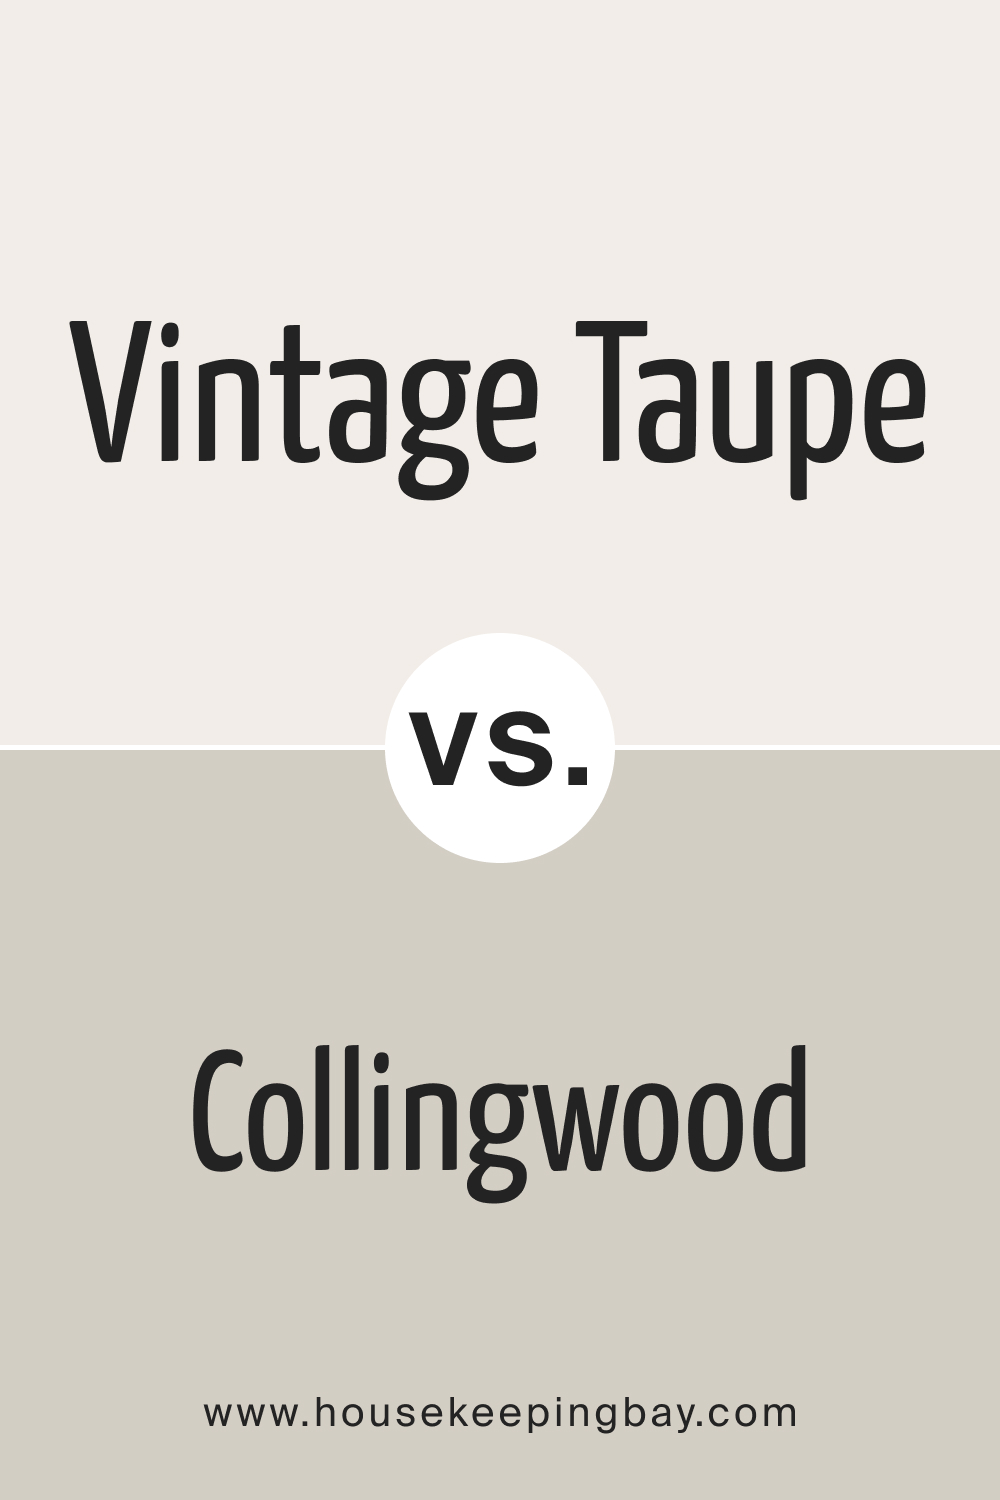 Vintage Taupe 2110 70 vs. BM Collingwood 859